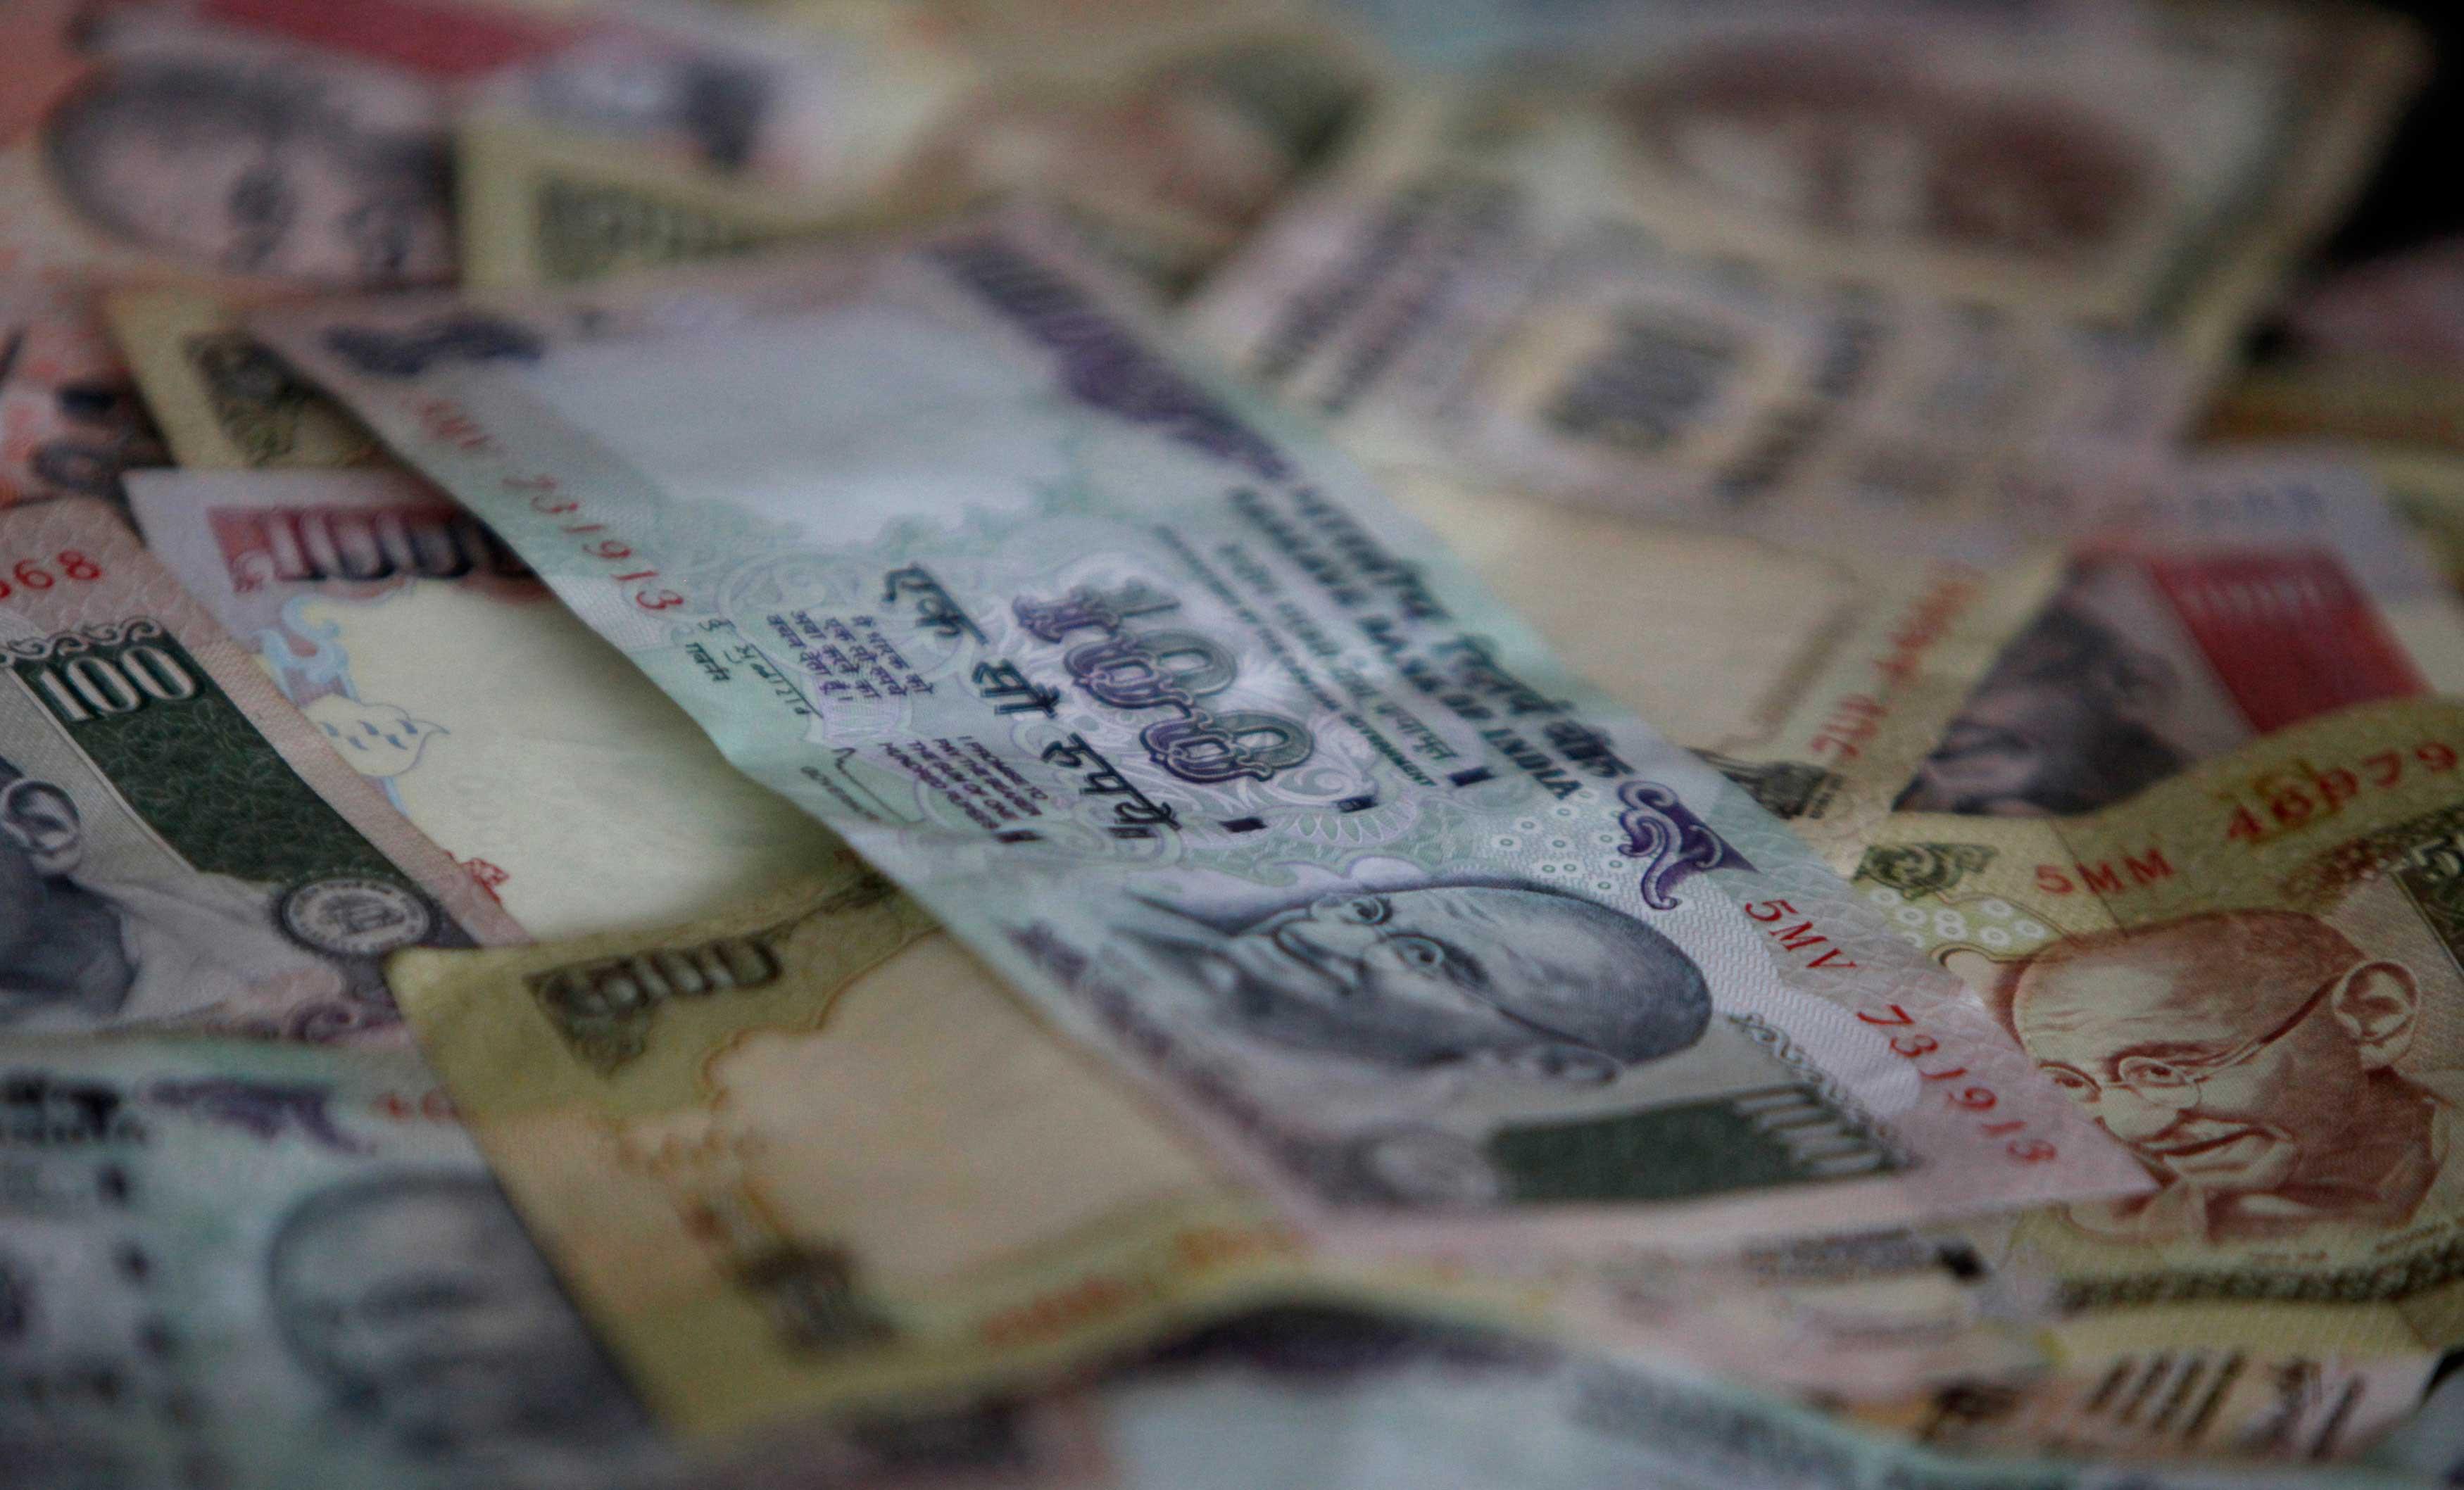 India home to 200K millionaires